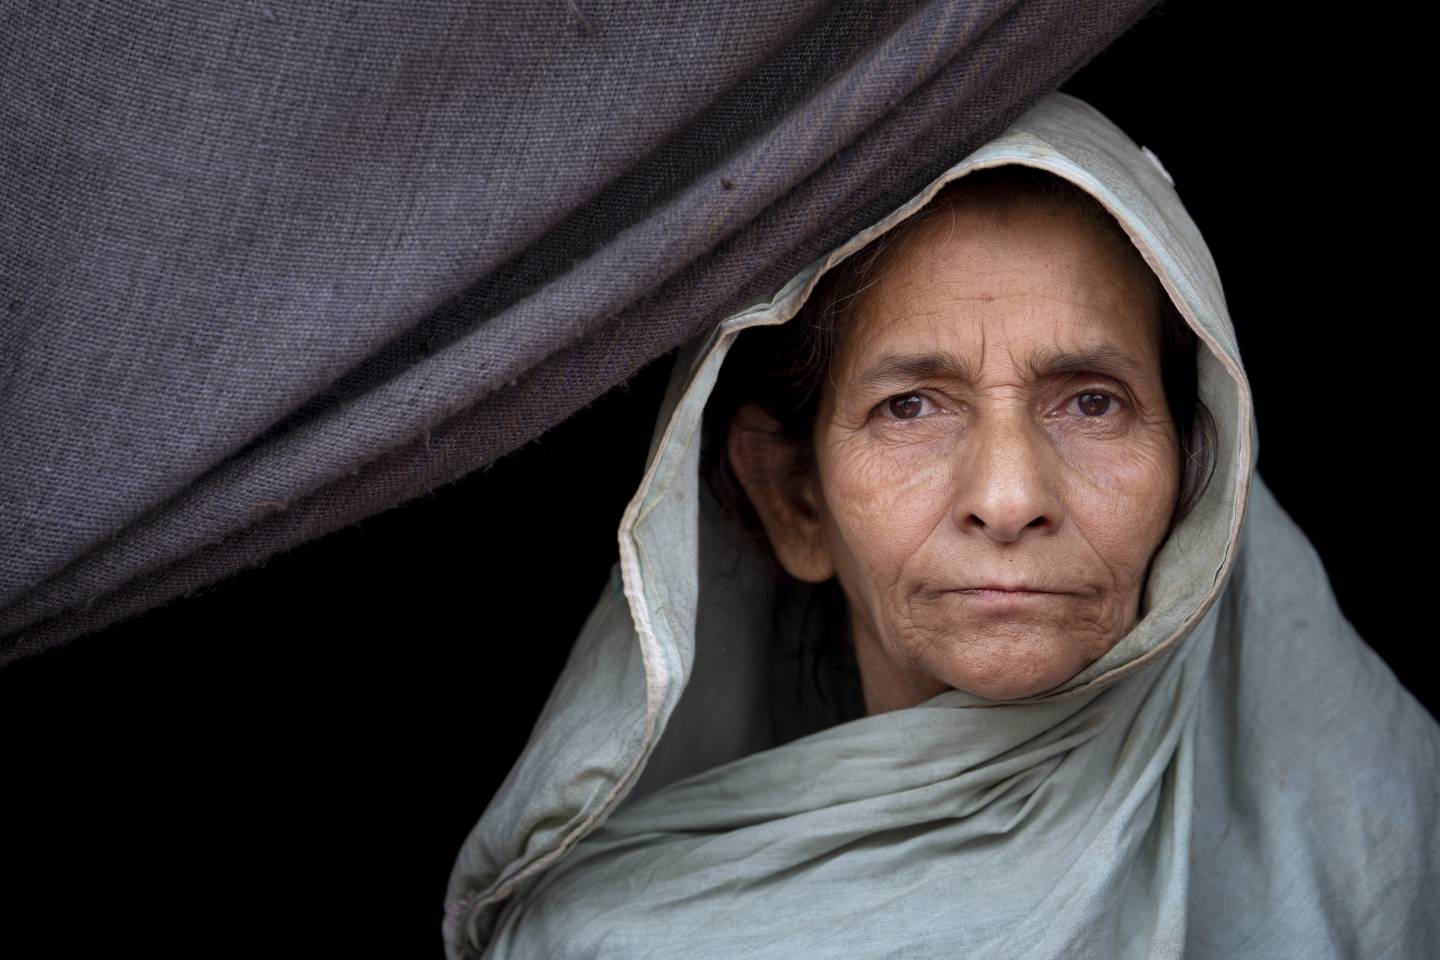 An older Rohingya woman